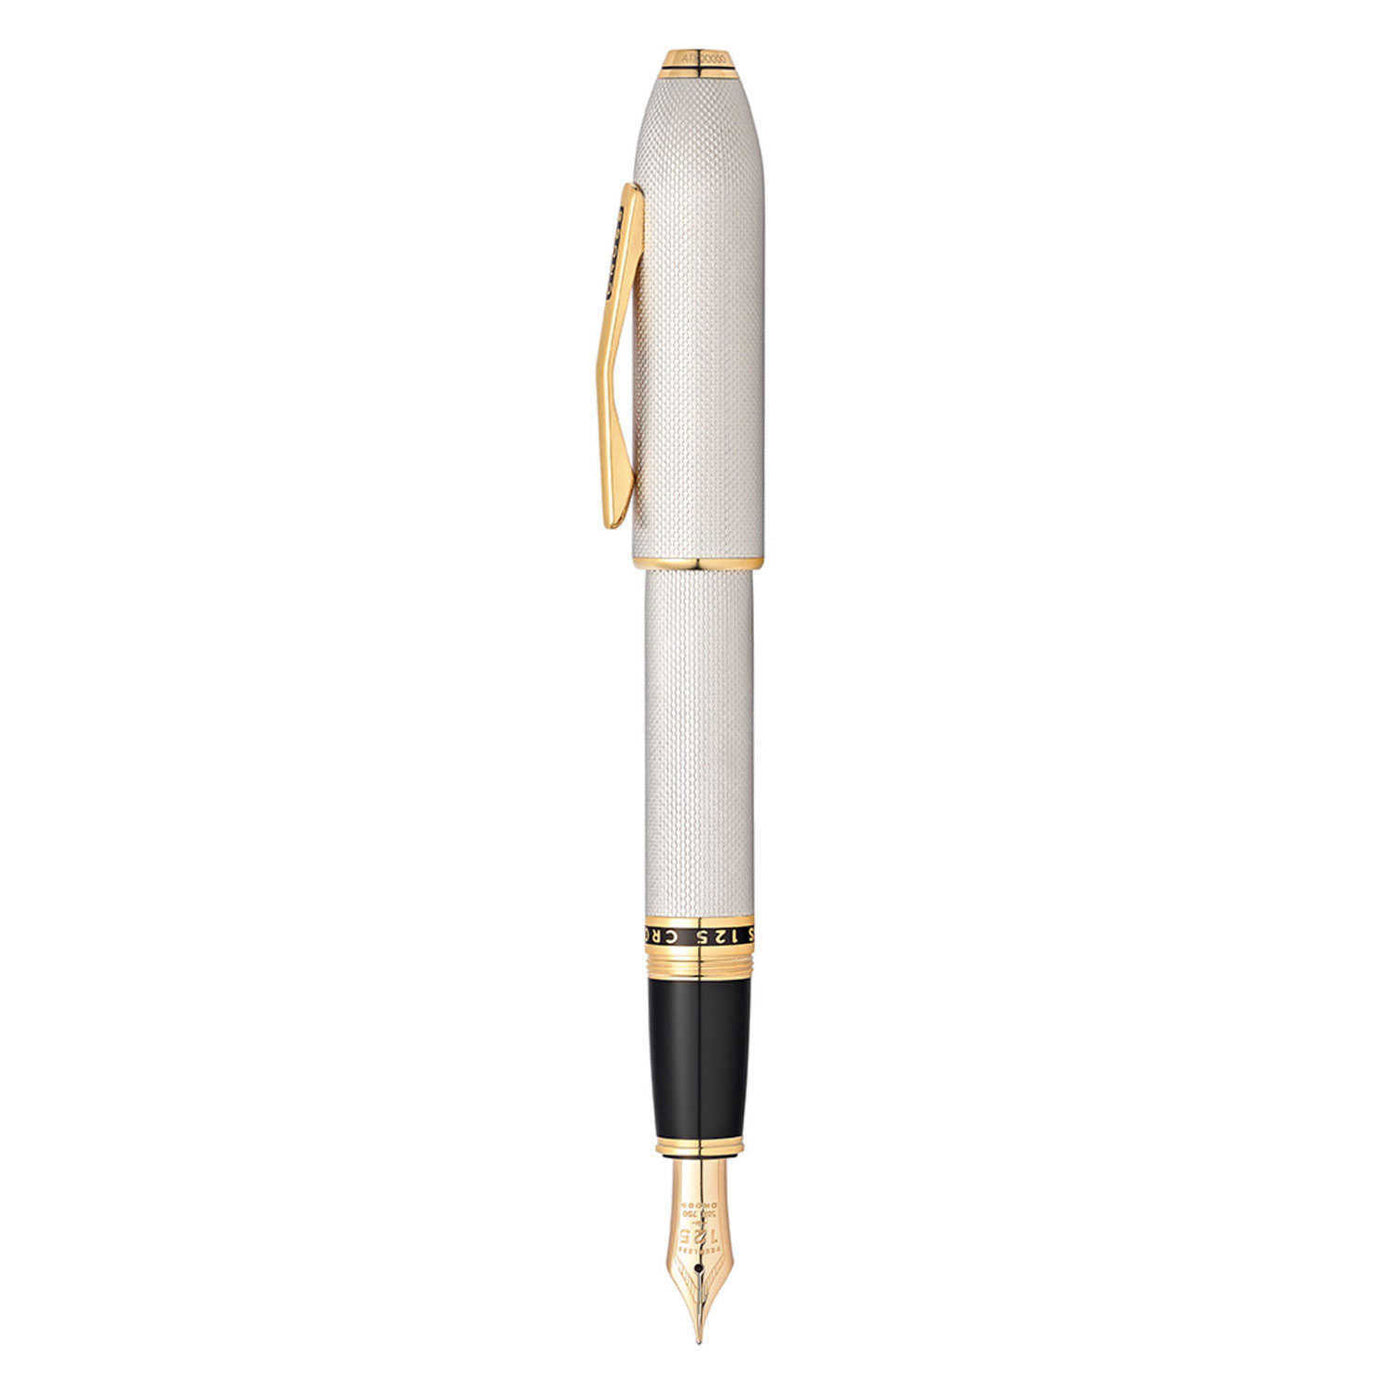 Cross Peerless 125 Fountain Pen Silver / Gold Trim - 18K Gold Nib 4